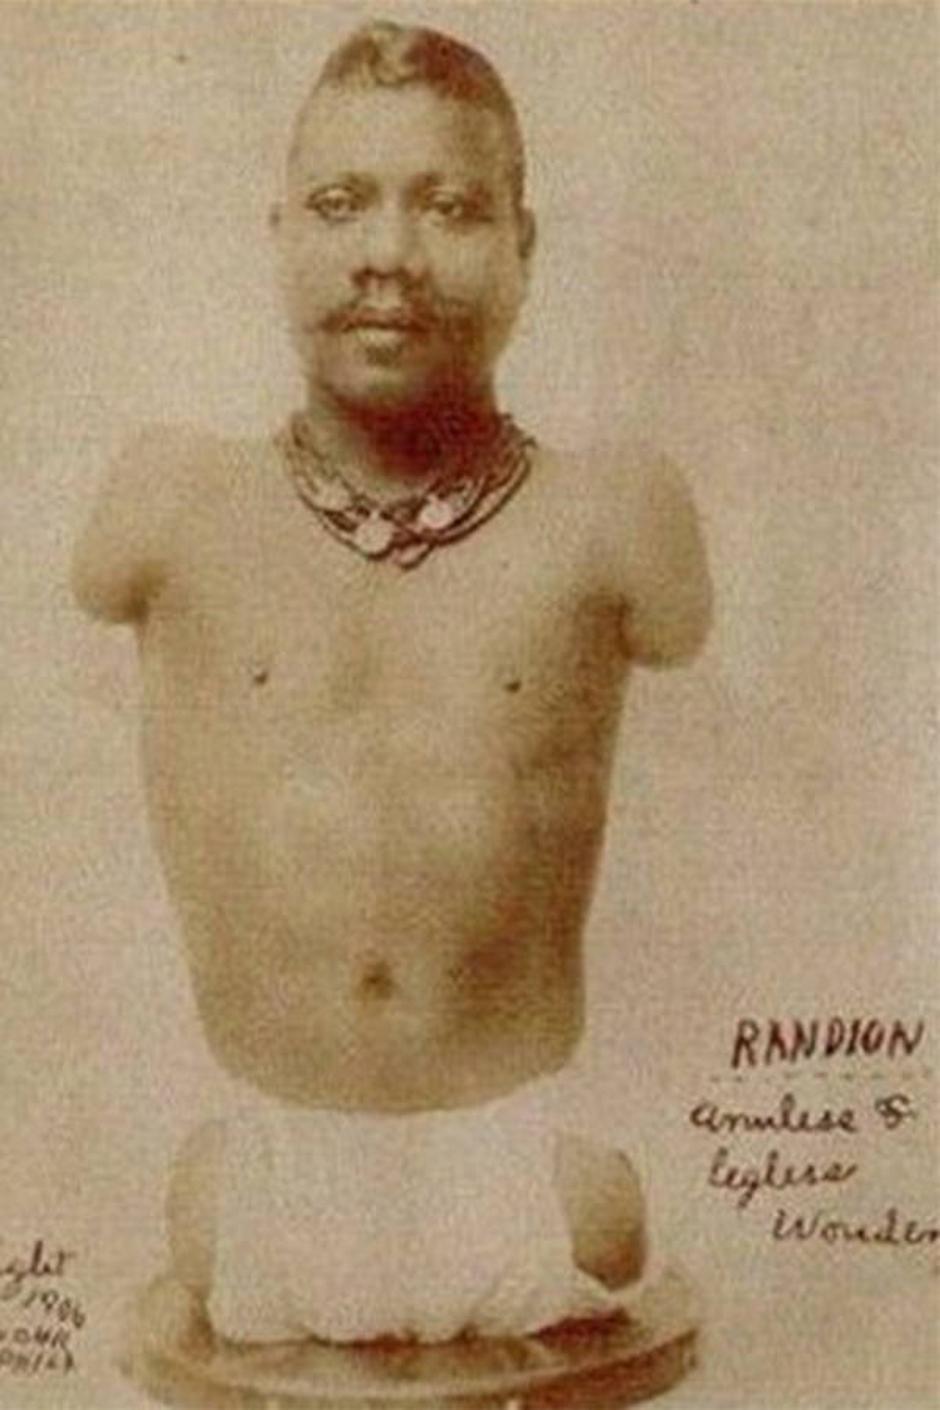 Prince Randian | Author: Wikipedia